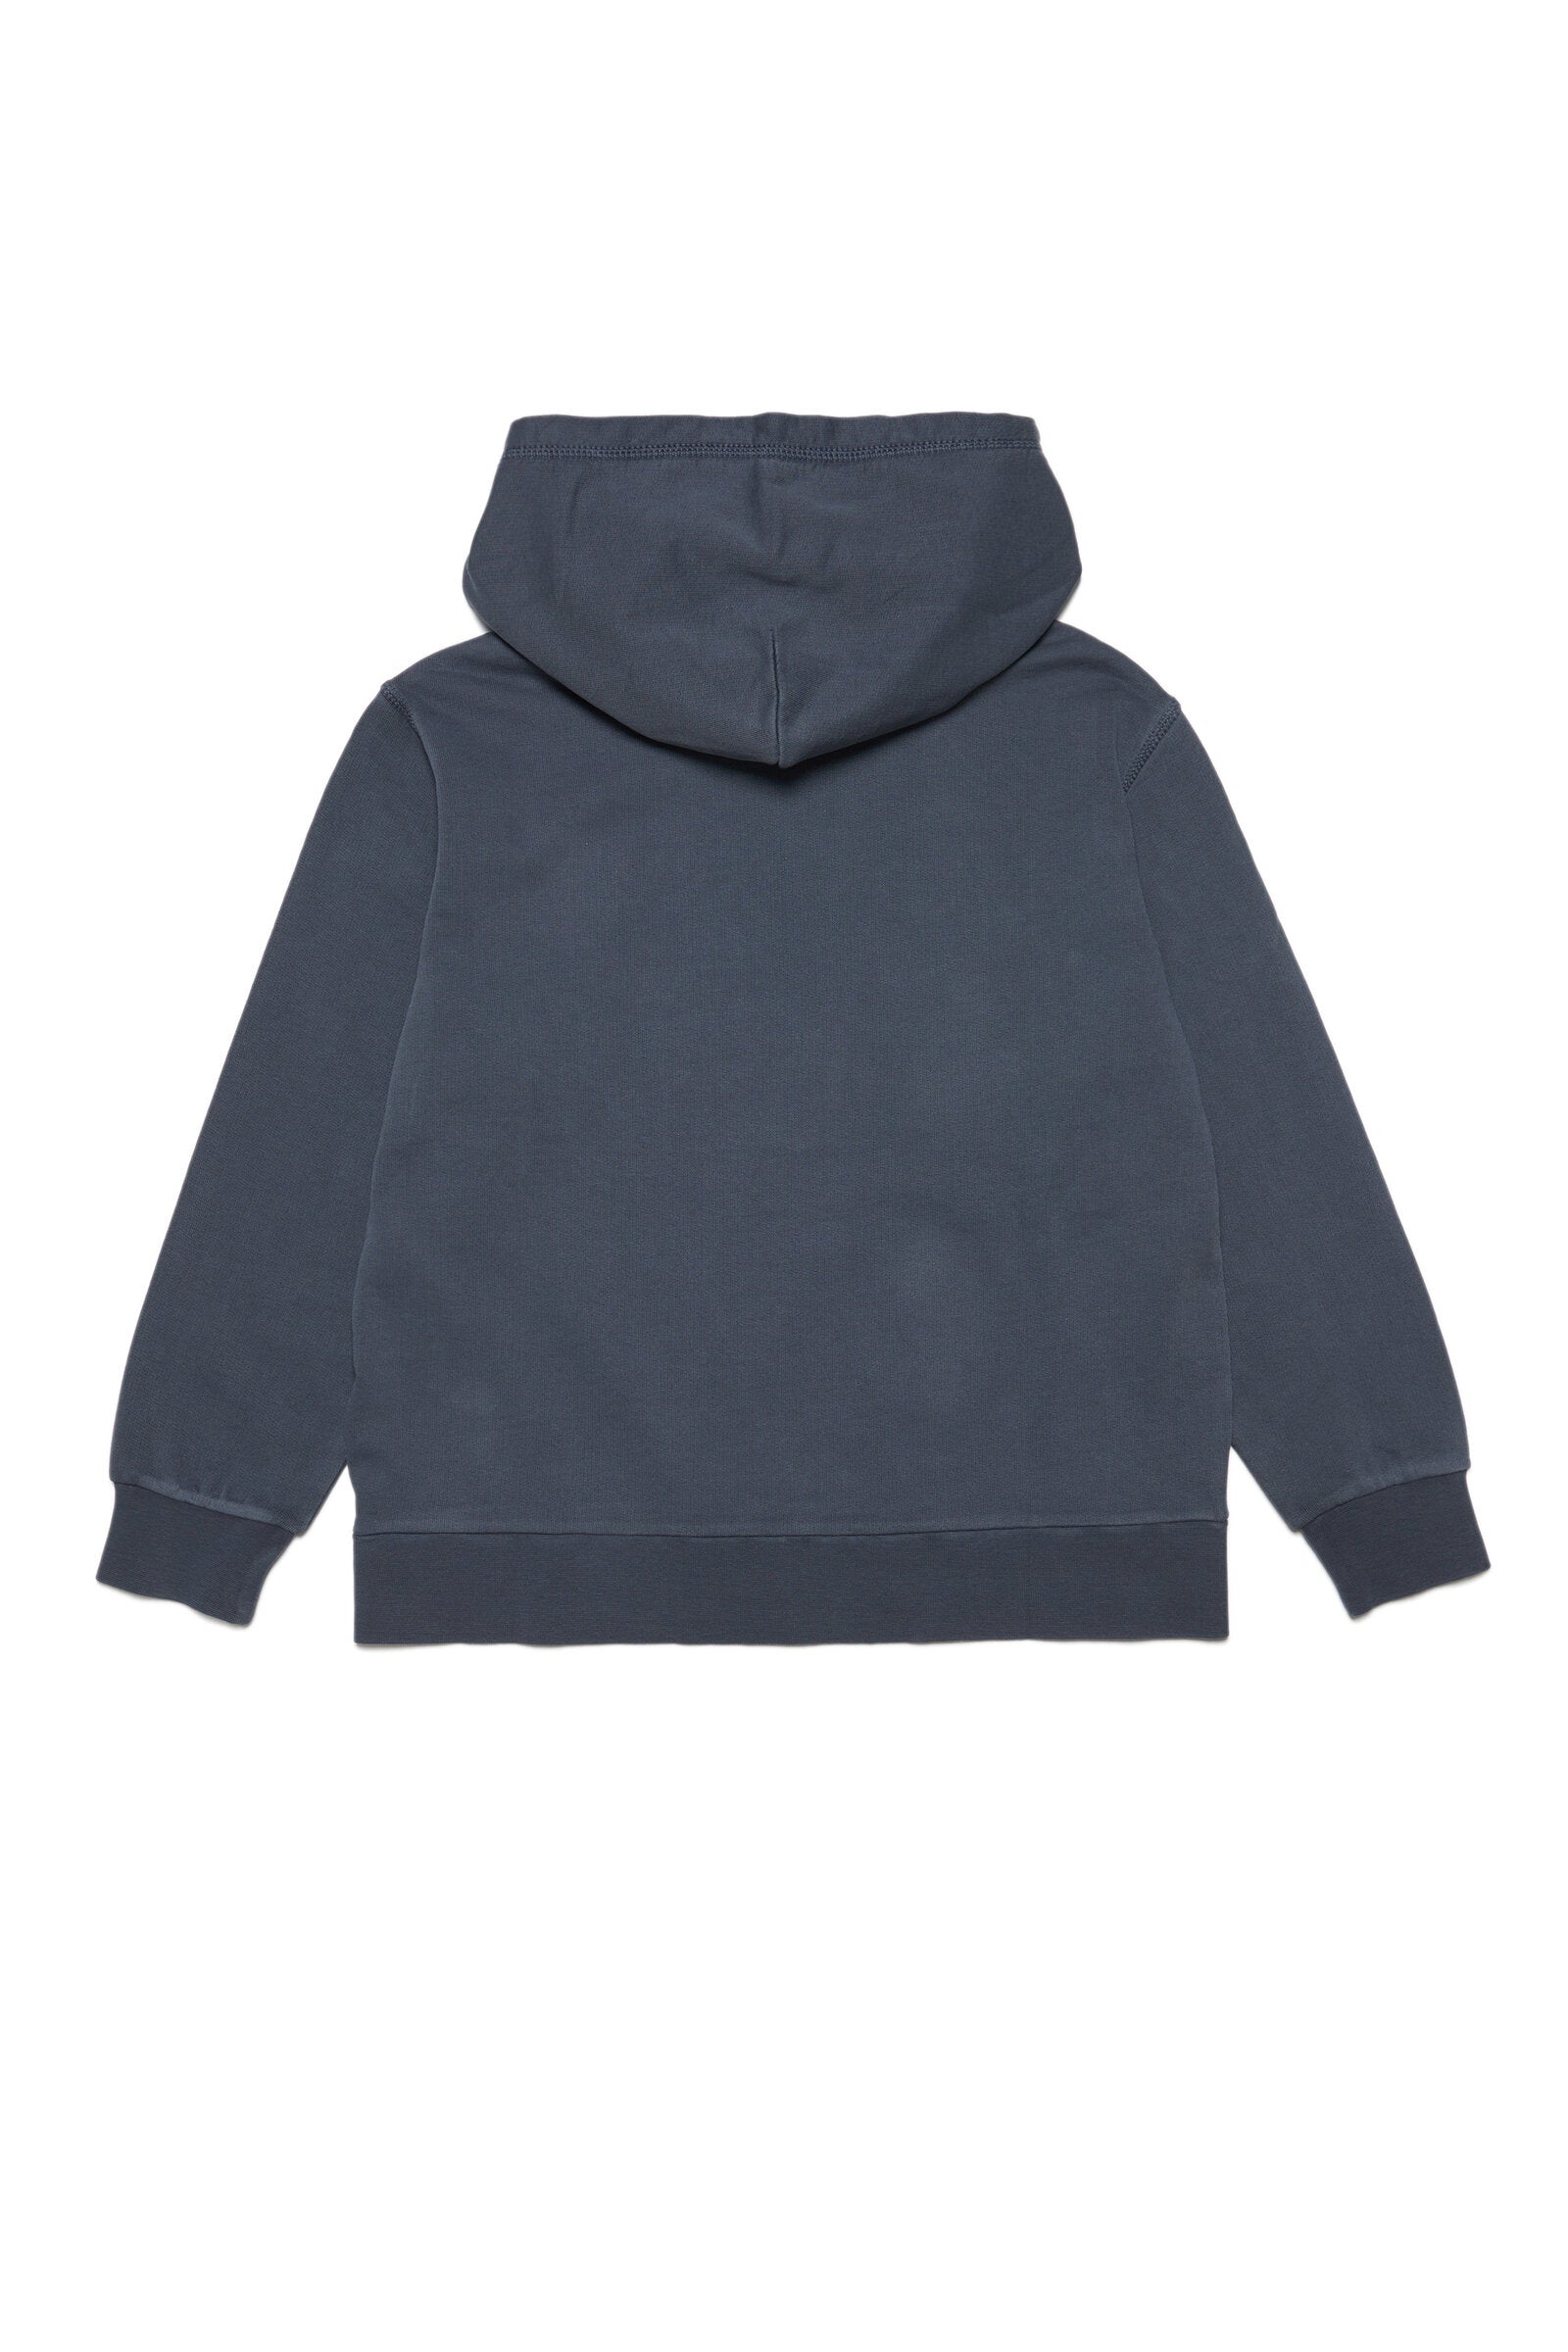 Grey vintage-effect hooded sweatshirt with textured logo